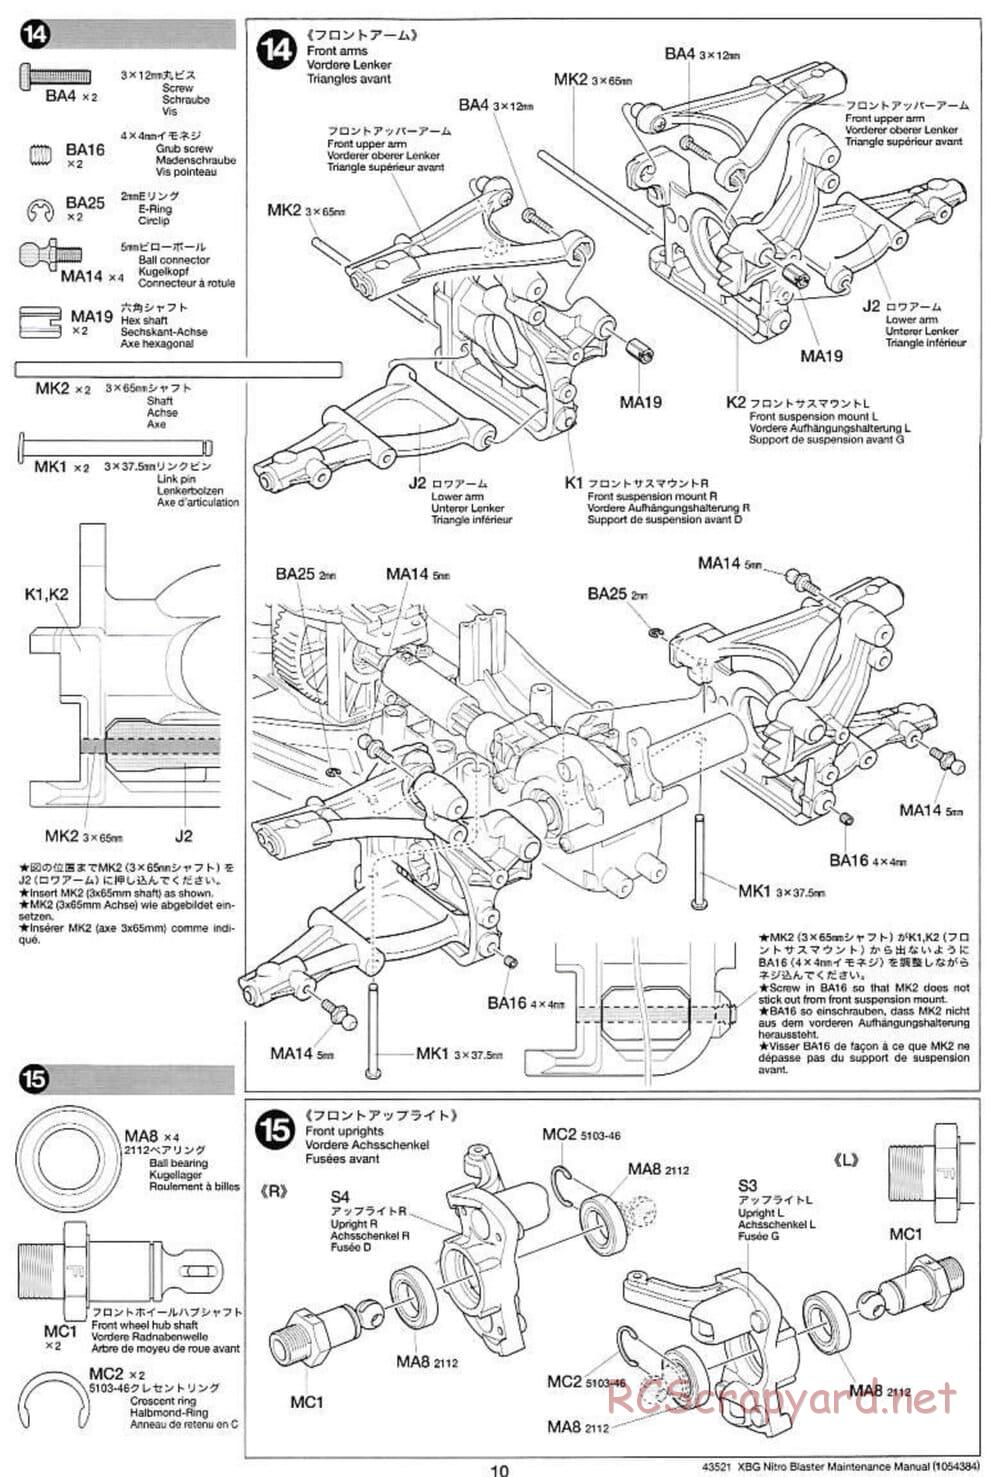 Tamiya - Nitro Blaster - NDF-01 - Maintenance Manual - Page 10